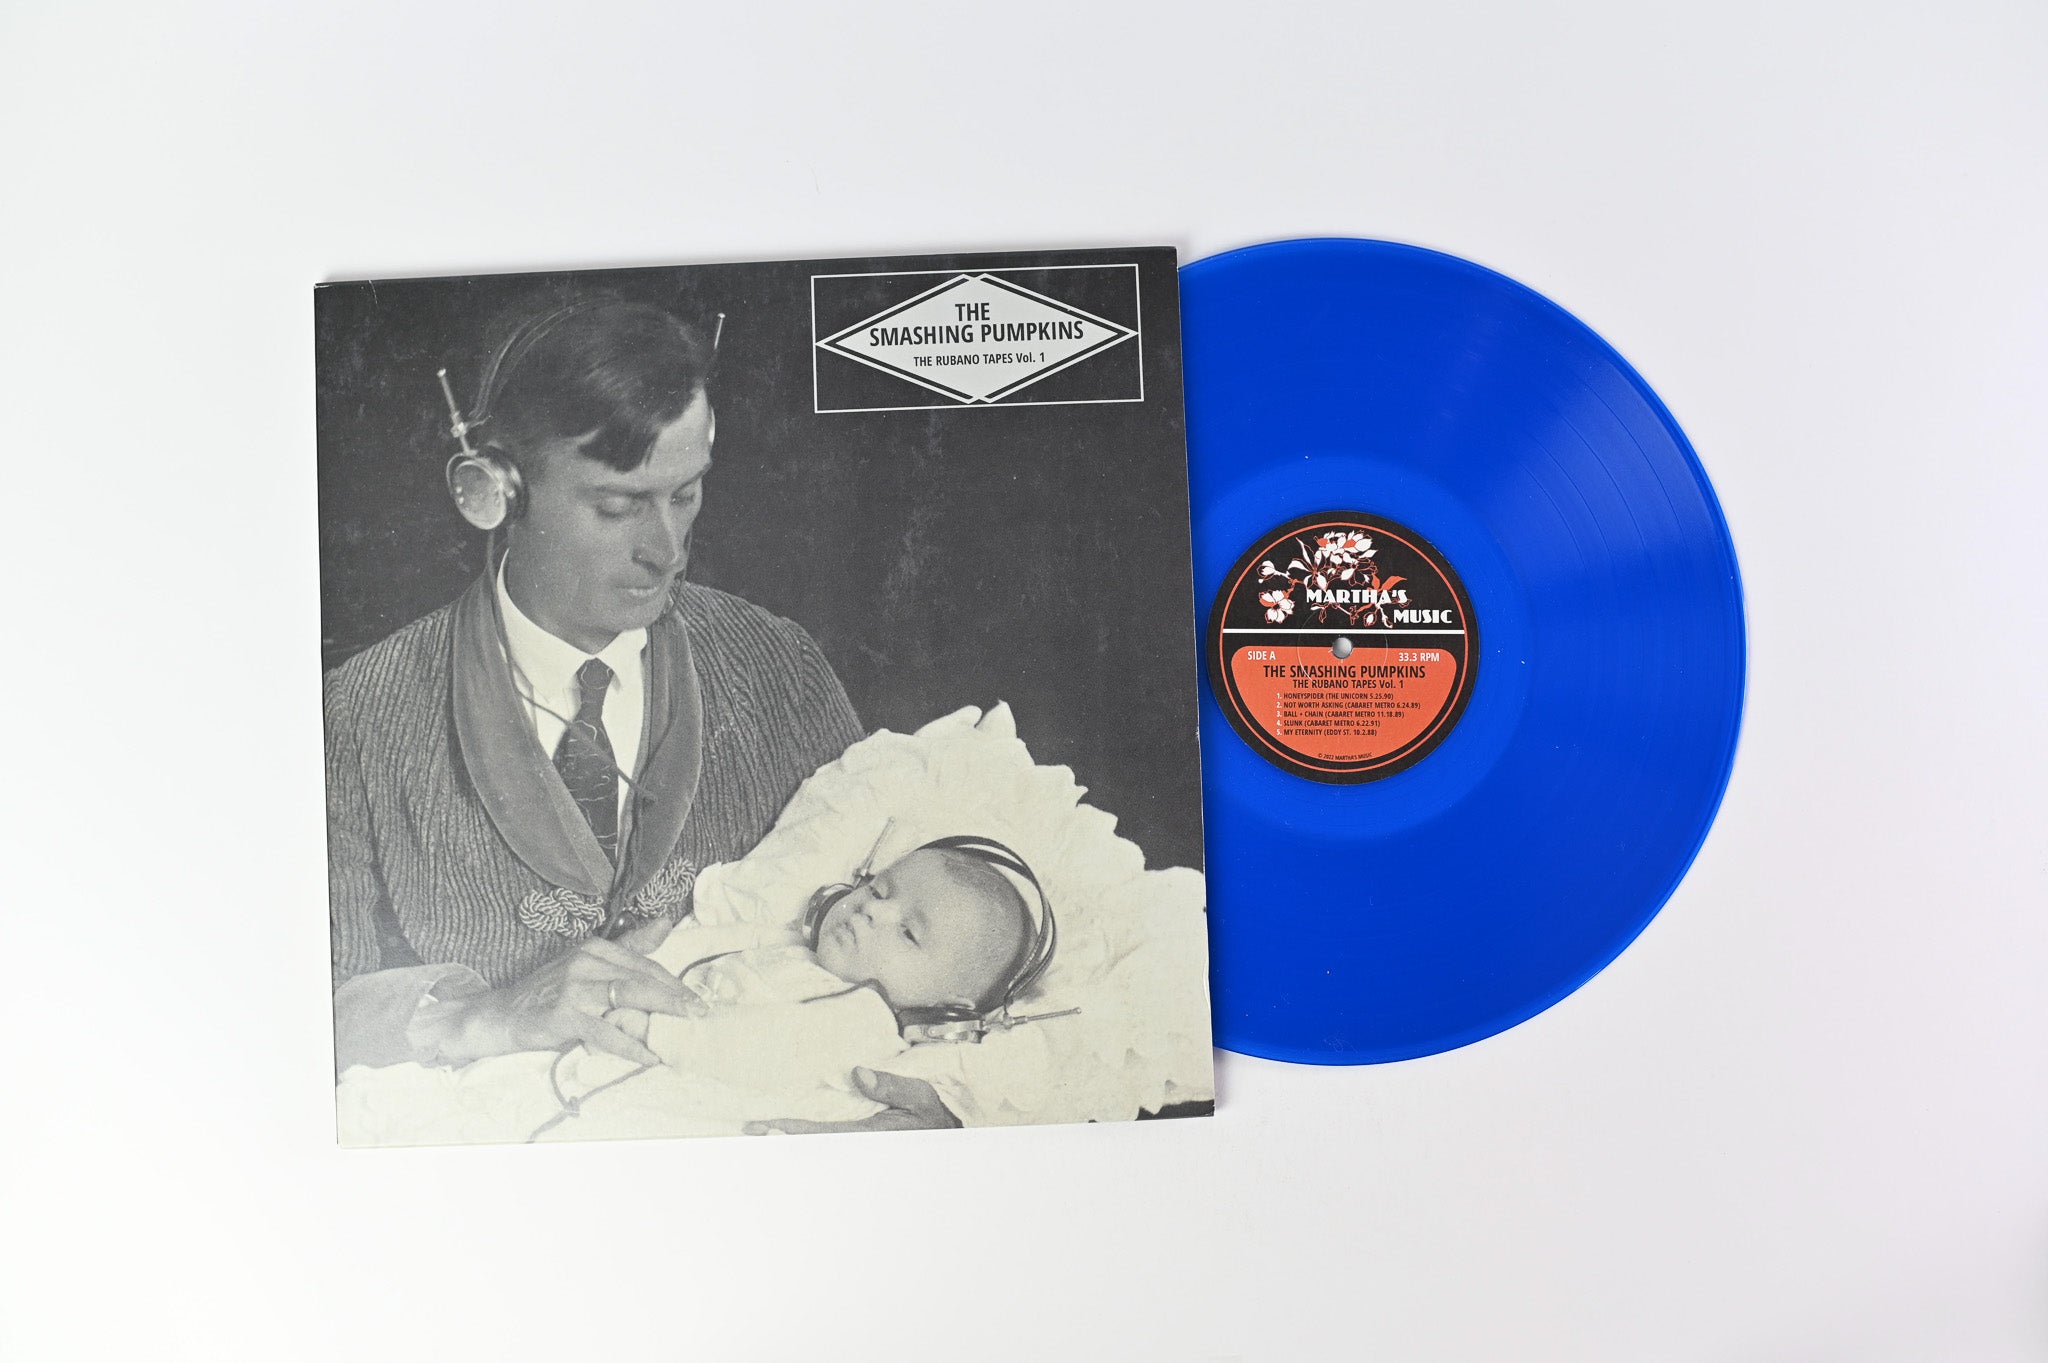 The Smashing Pumpkins - The Rubano Tapes Vol. 1 on Martha's Music Ltd Blue Vinyl